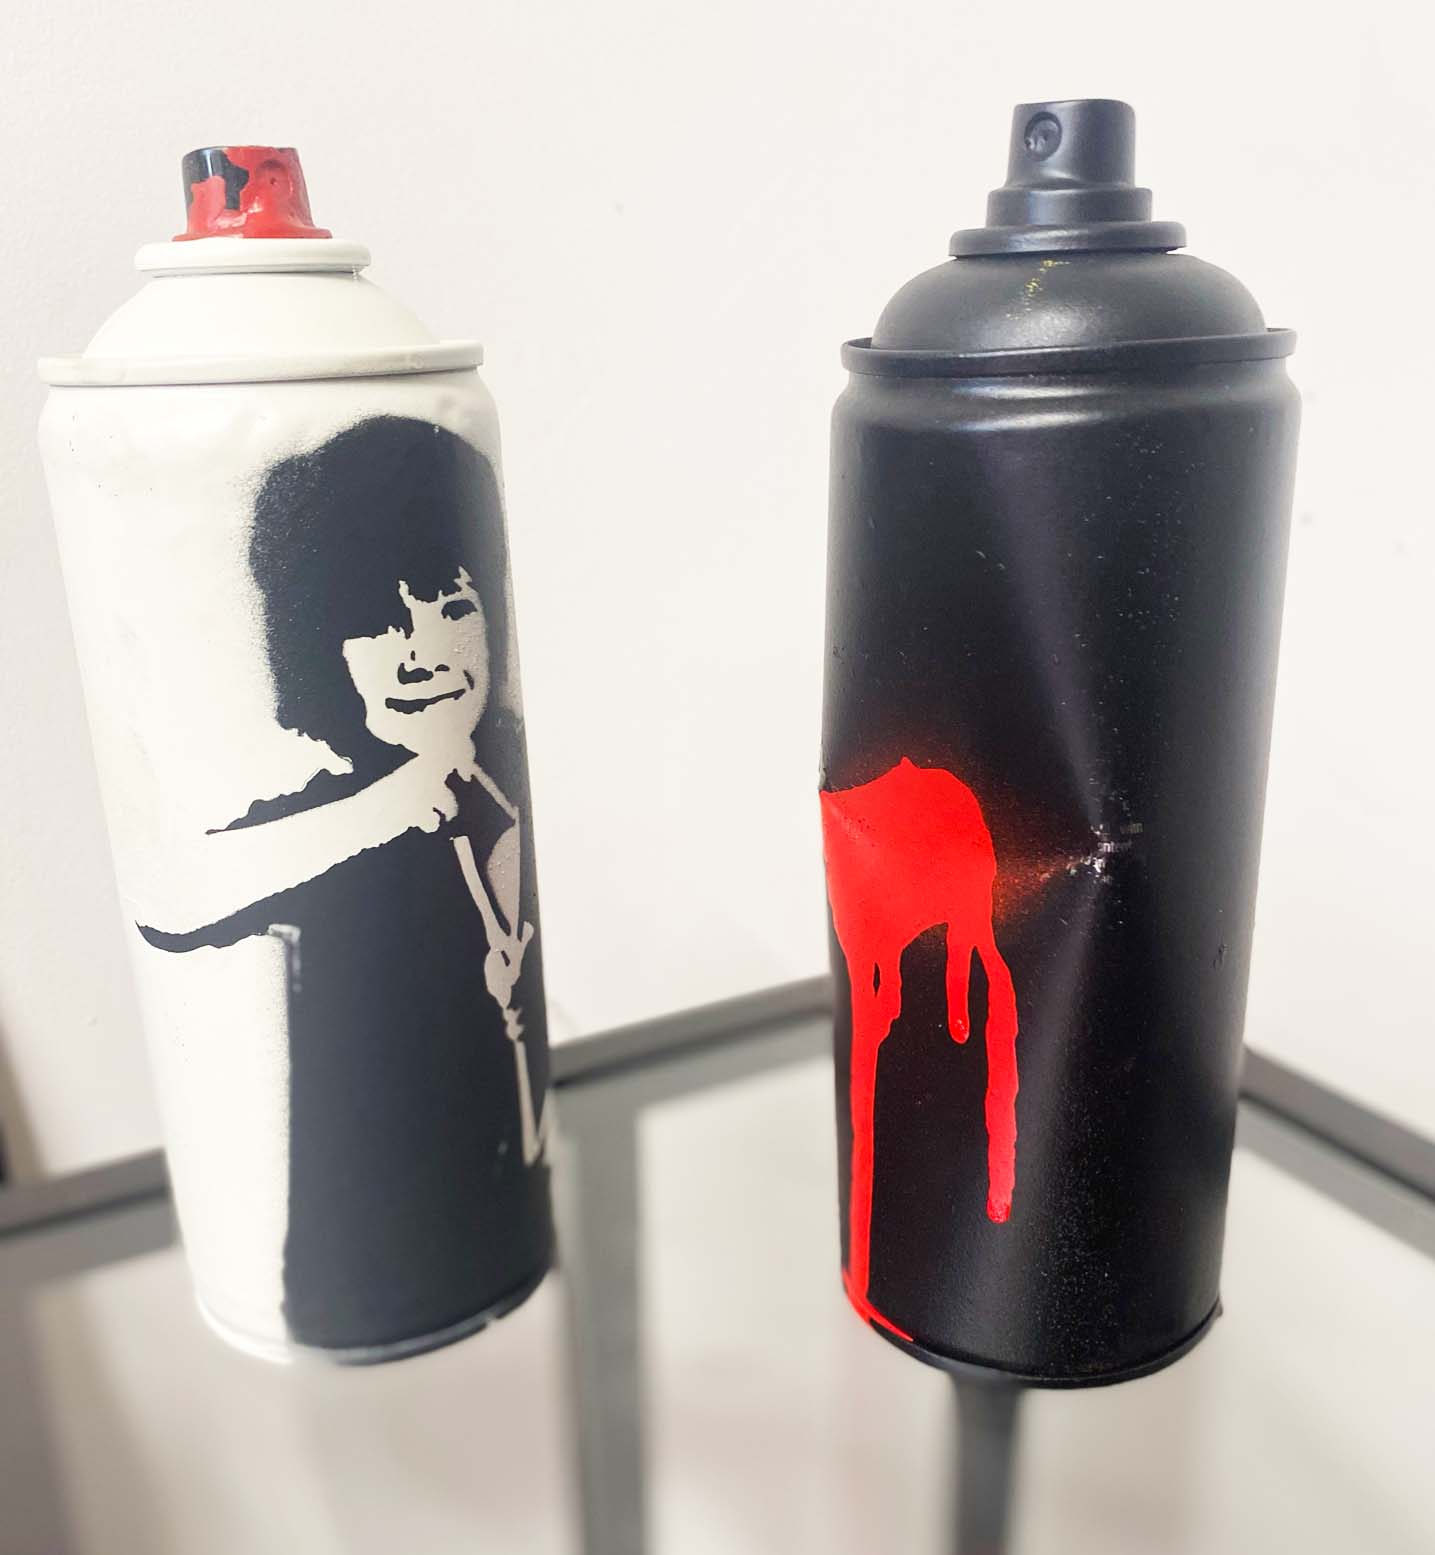 Spray can kid red edition - Smolensky Gallery